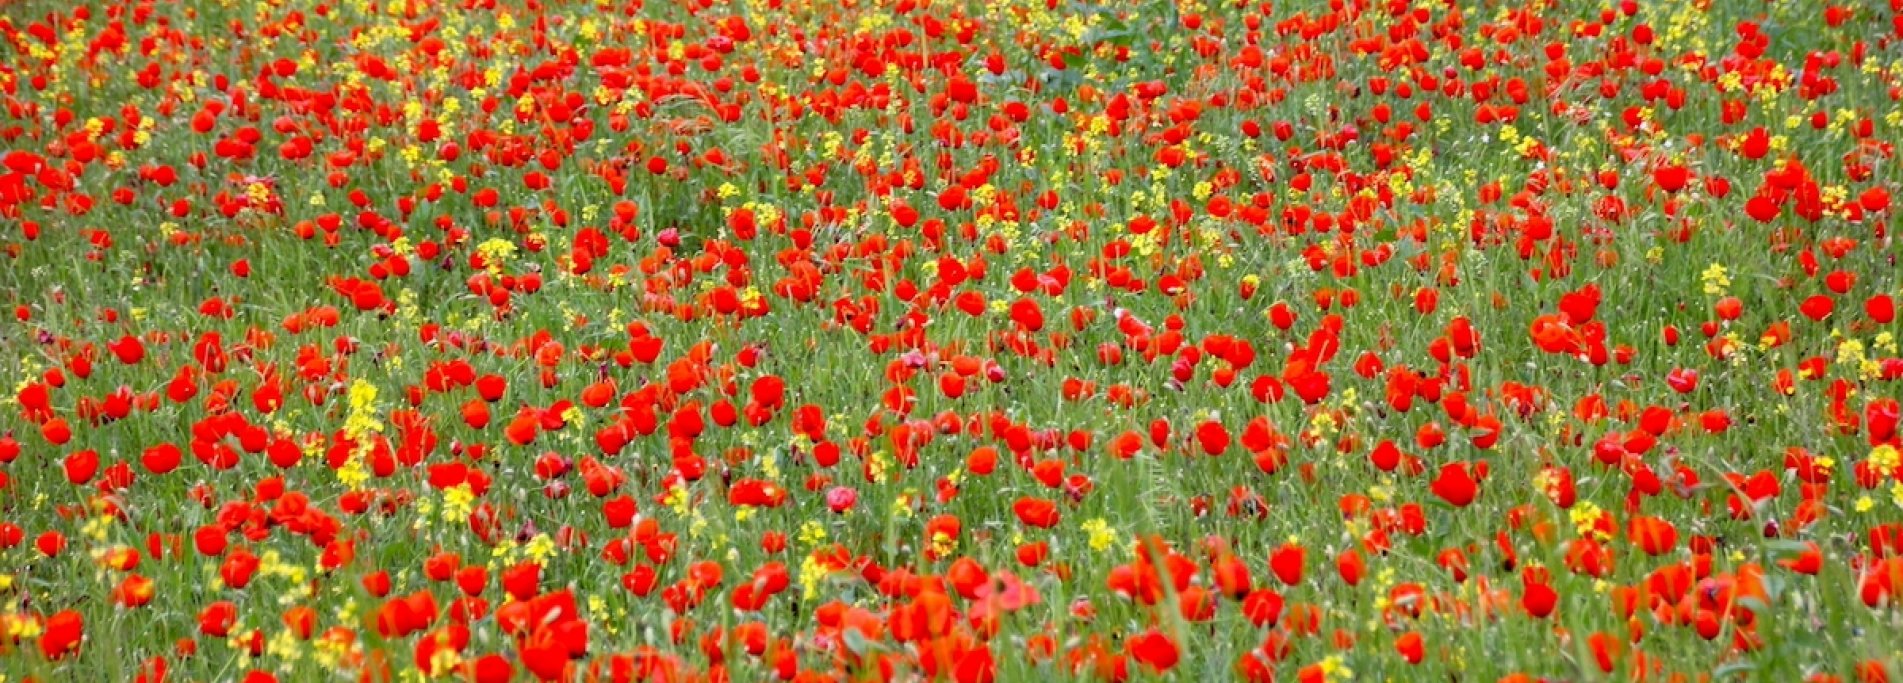 Poppy fields of Kyrgyzstan  - Splendor of the Chui valley